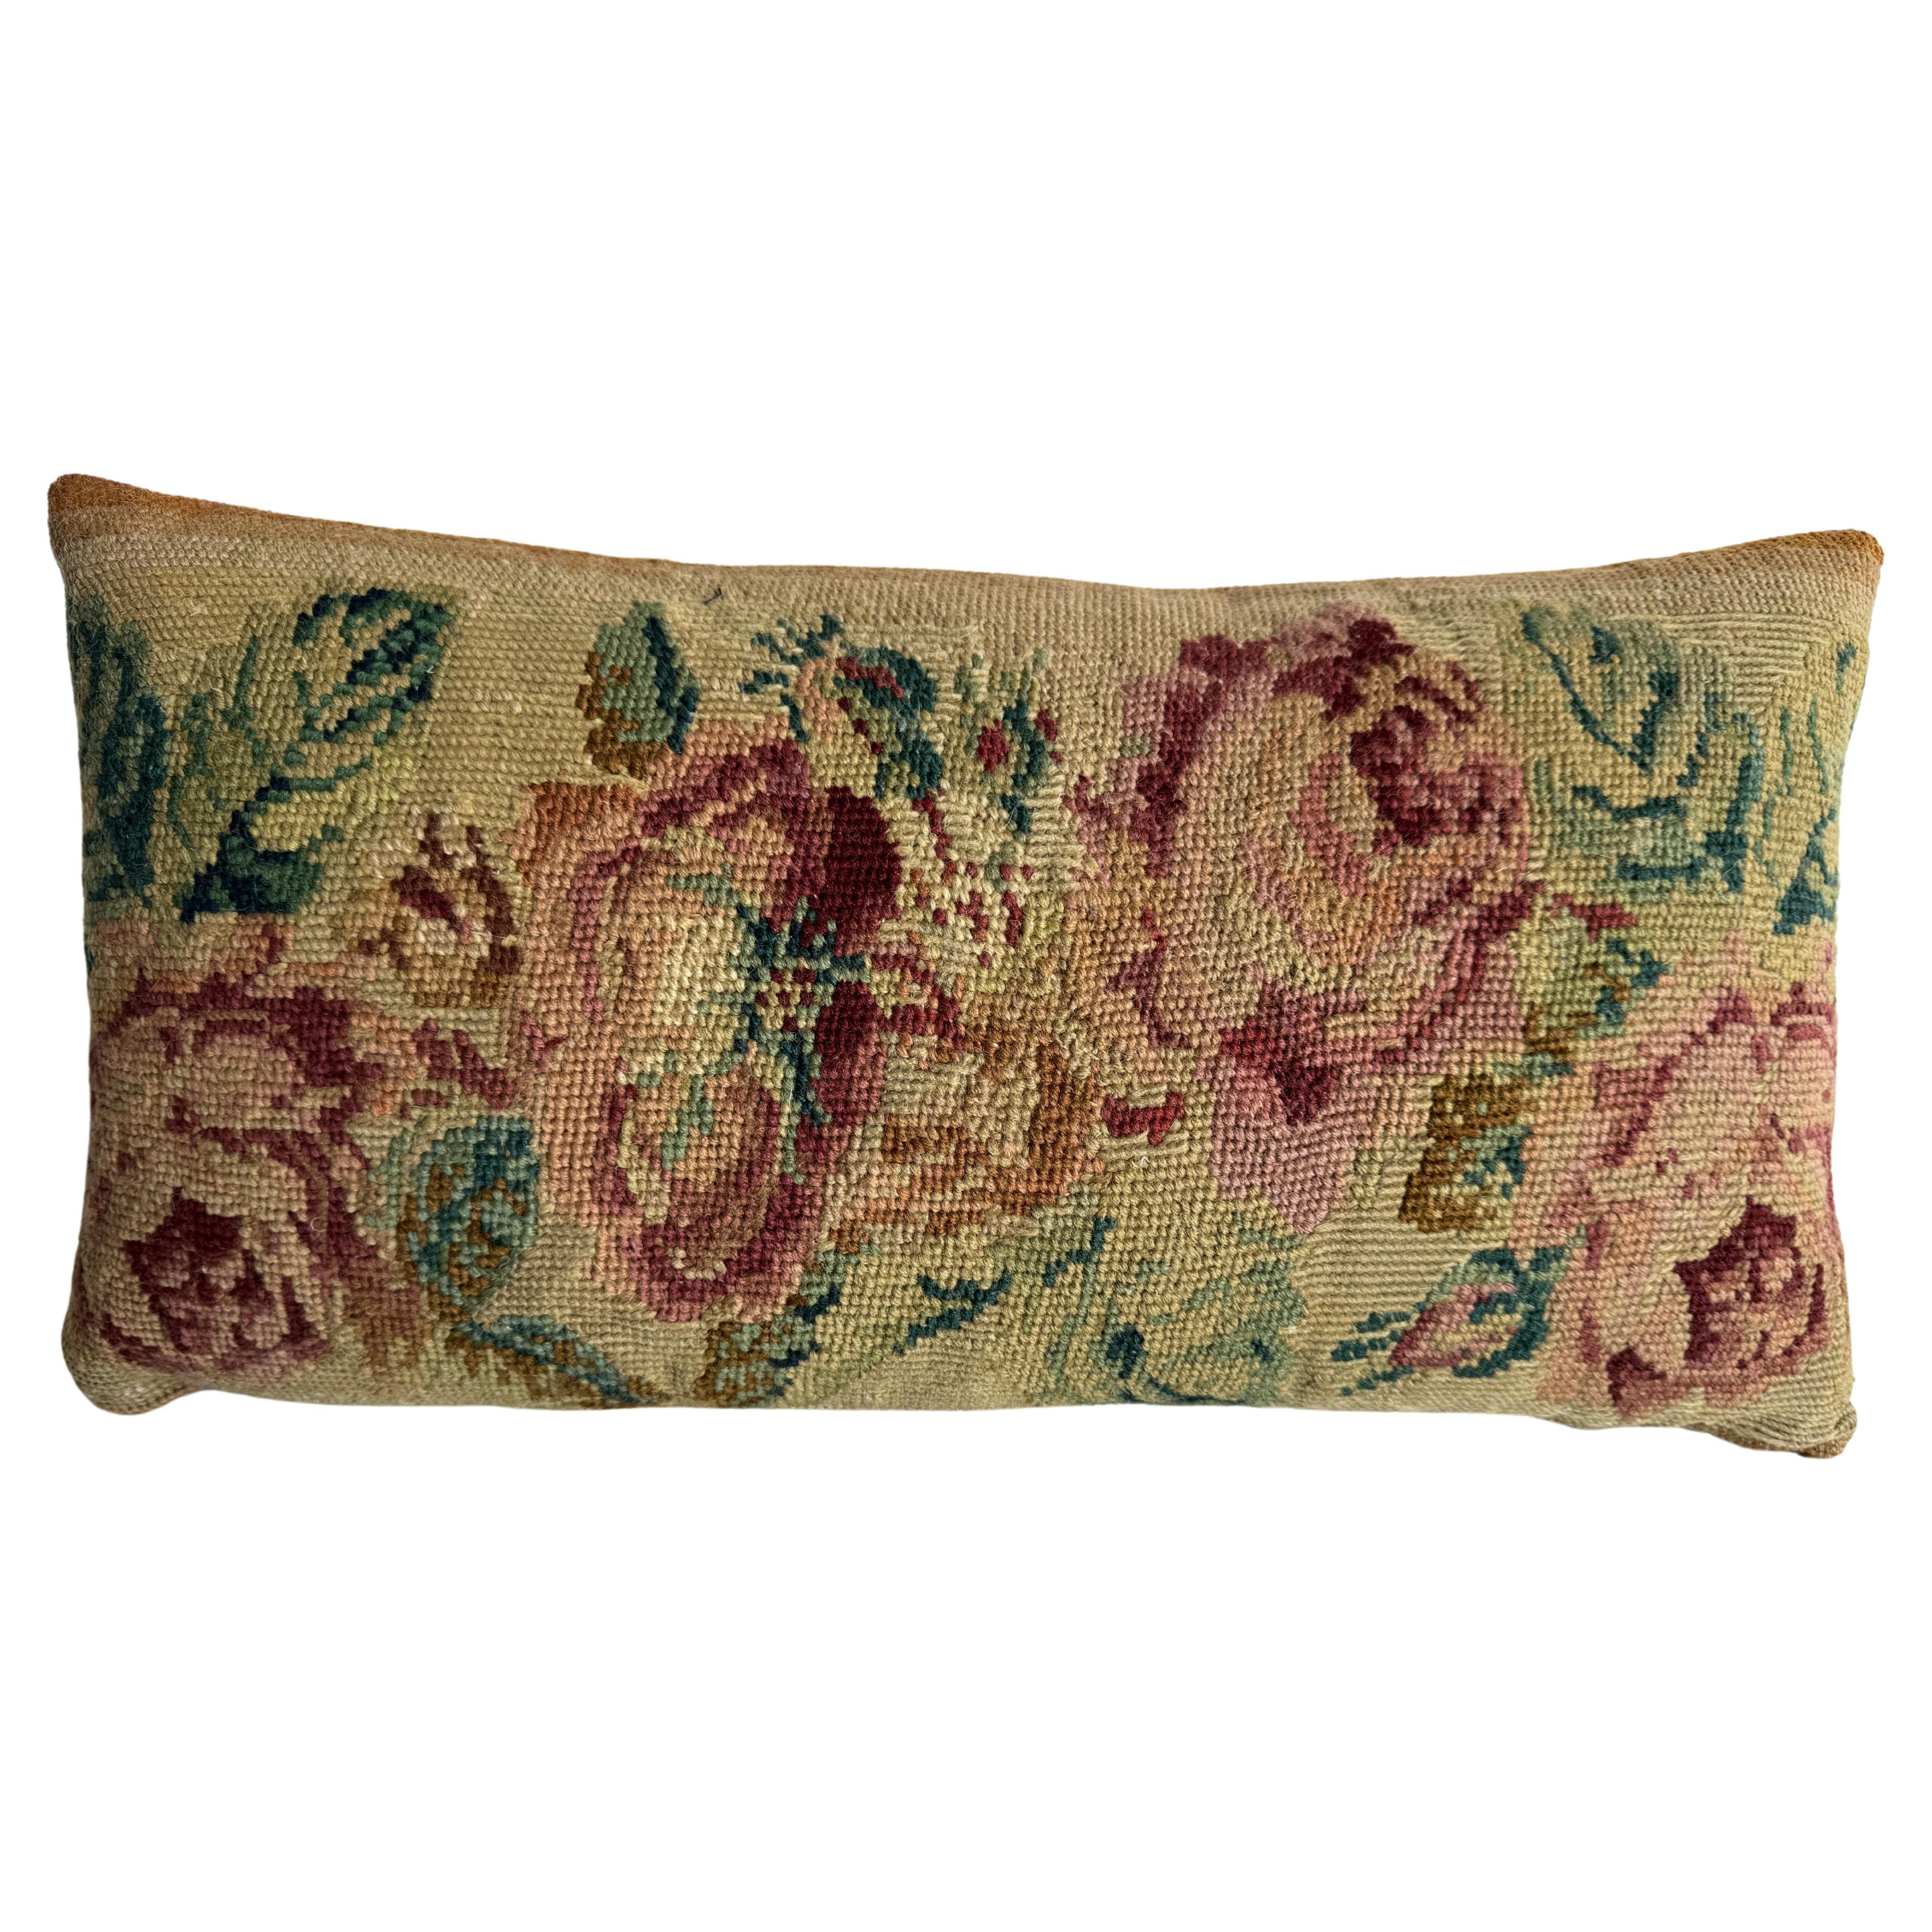 1851 English Needlework 19" x 10" Pillow For Sale